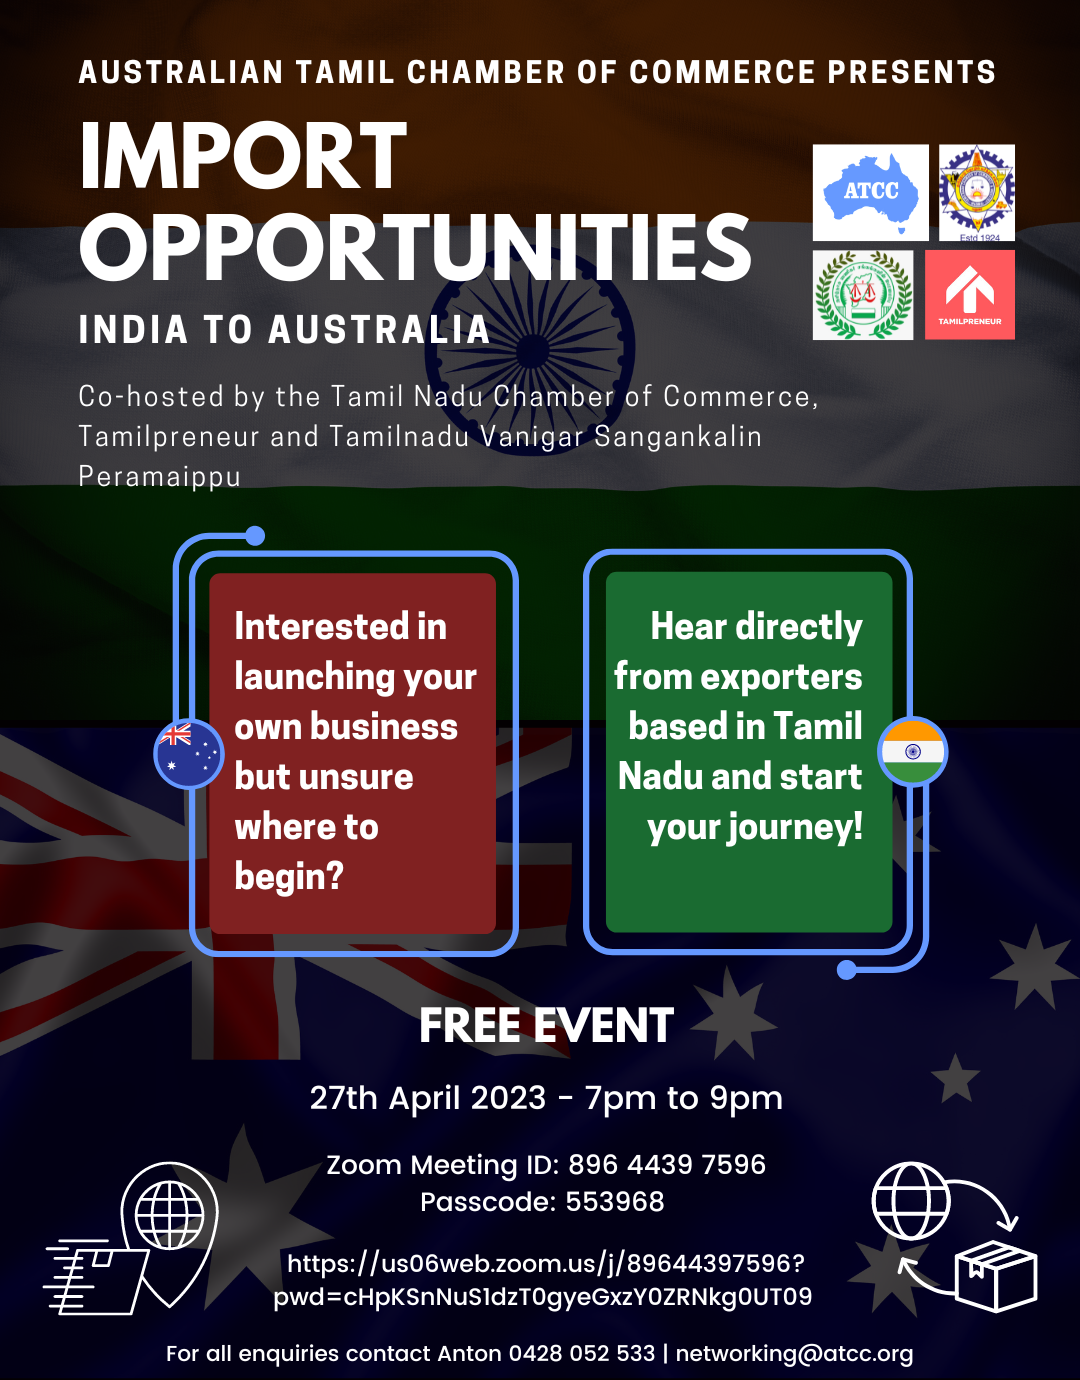 IMPORT OPPORTUNITIES - INDIA TO AUSTRALIA
